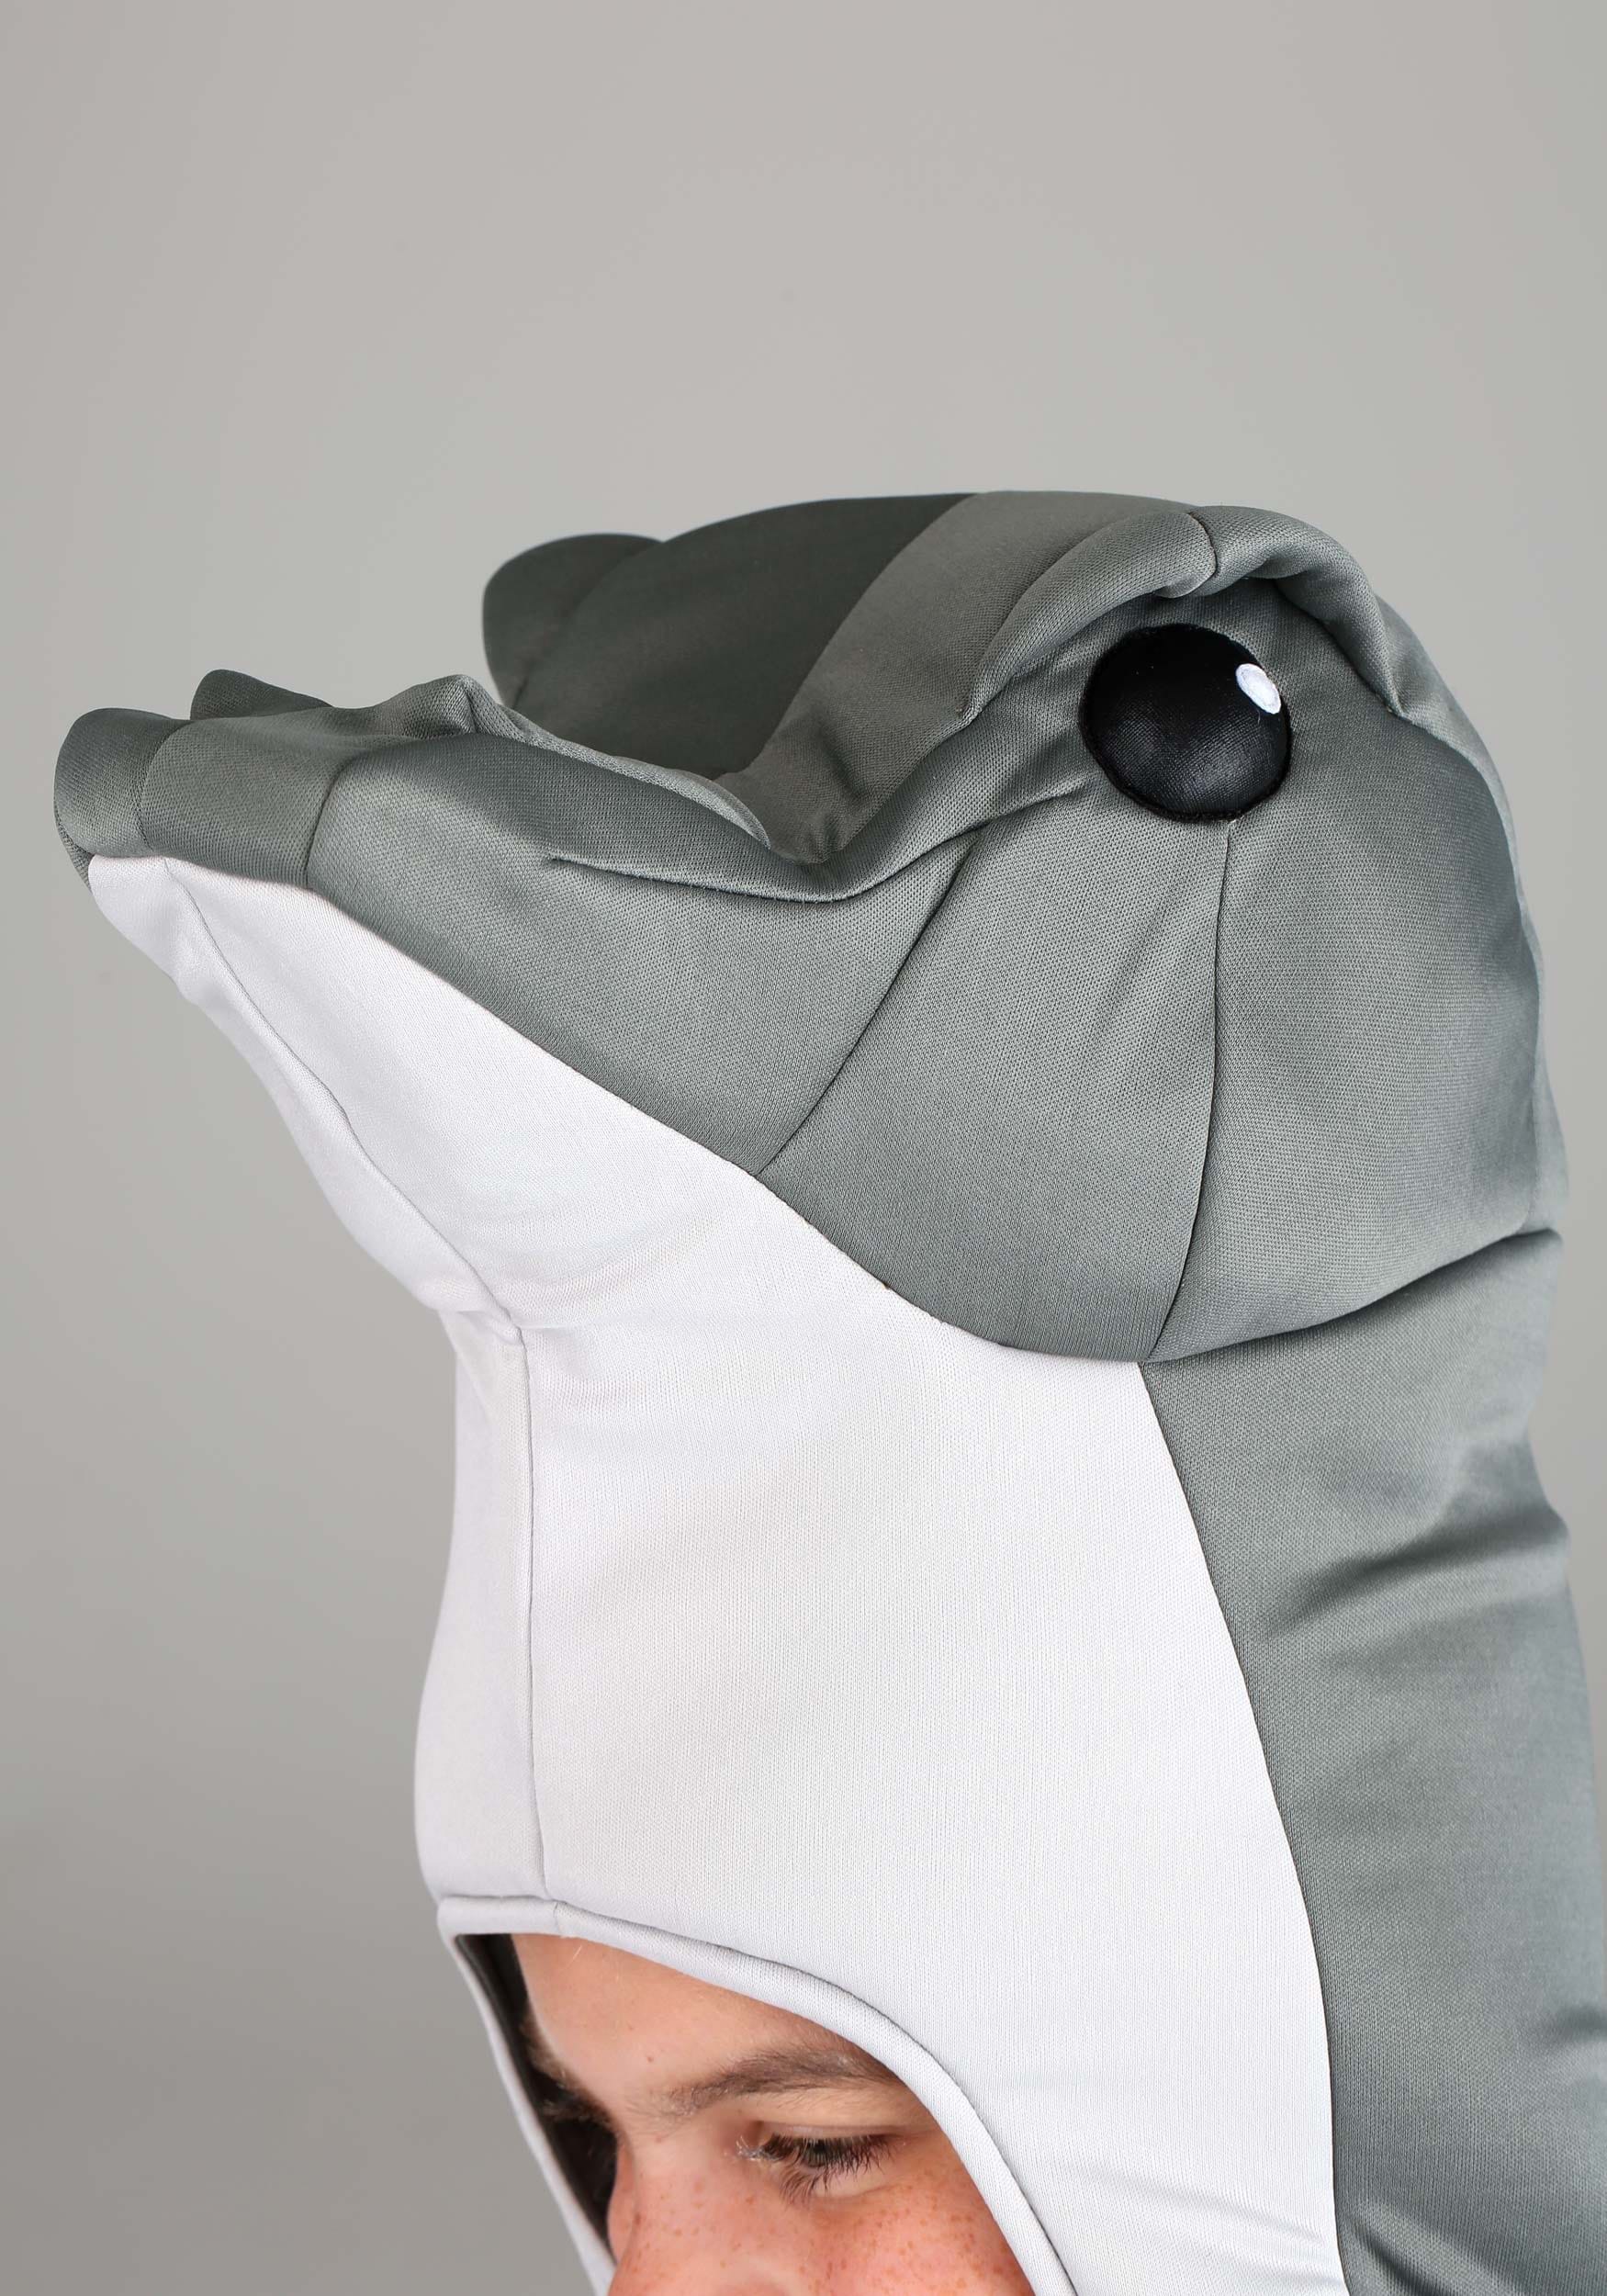 Loch Ness Monster Kid's Costume